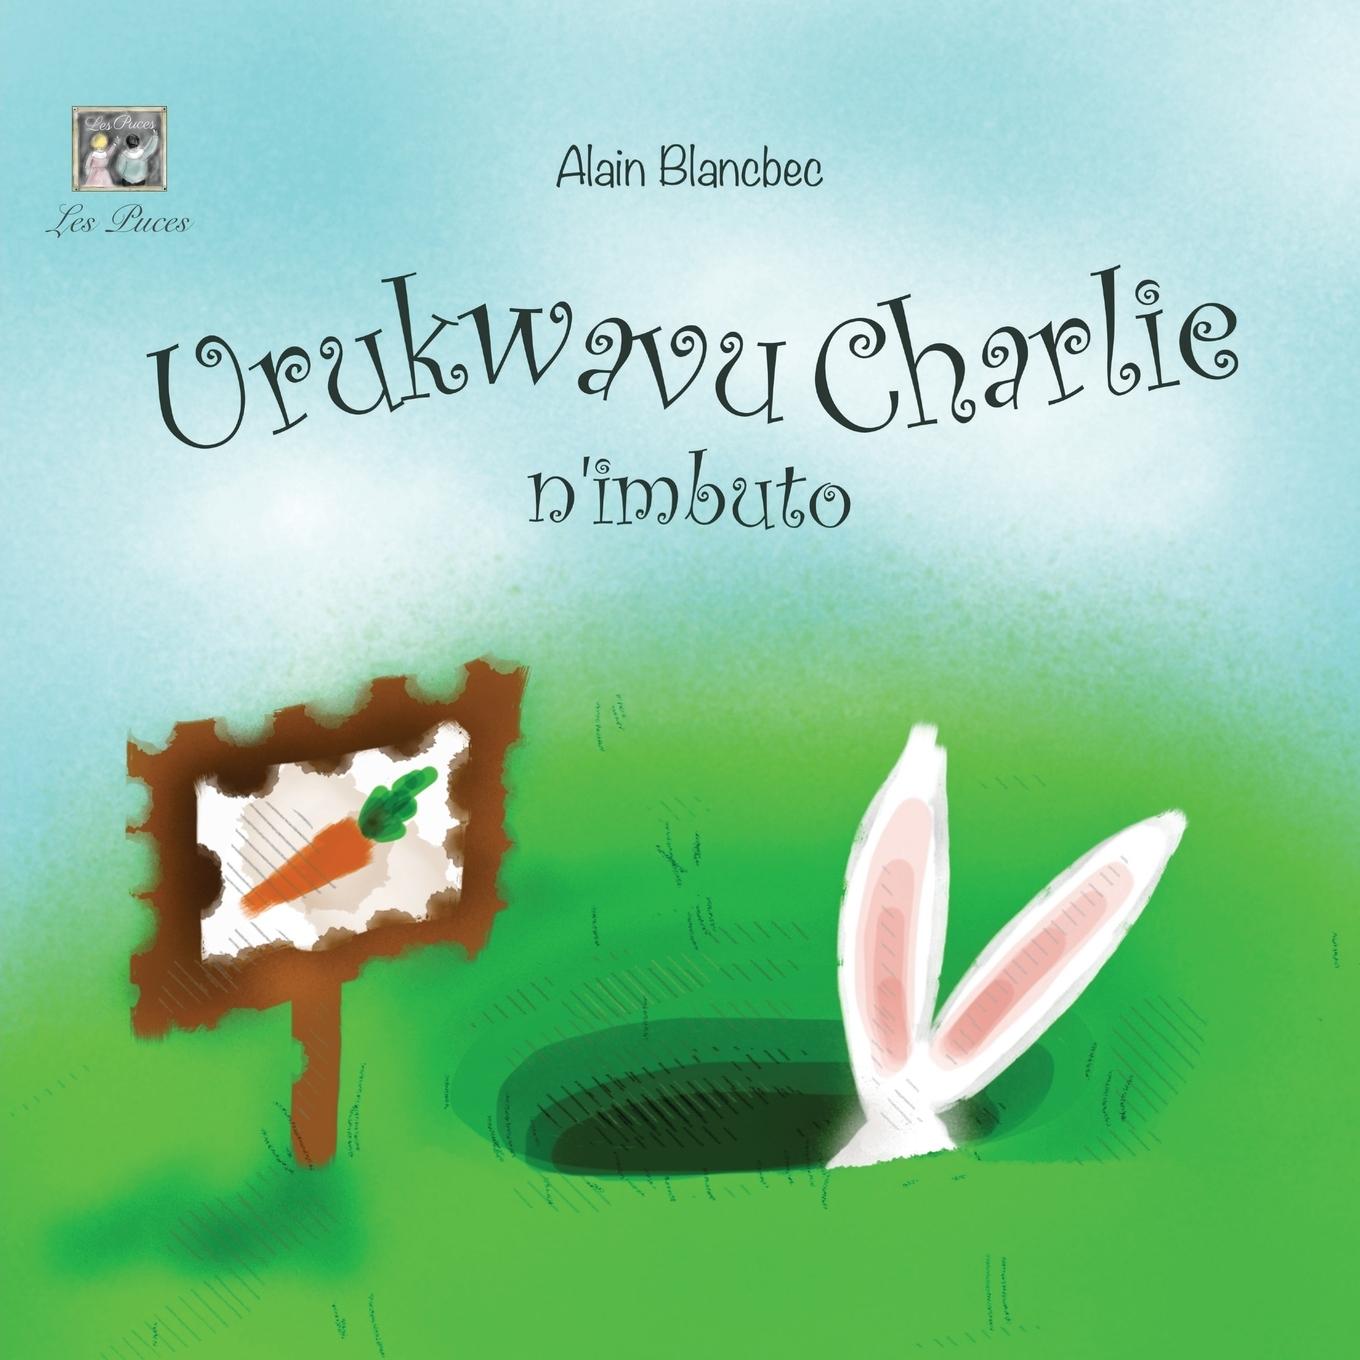 Kniha Charlie Rabbit and the Seeds: Urukwavu Charlie n'Imbuto Badger Davis